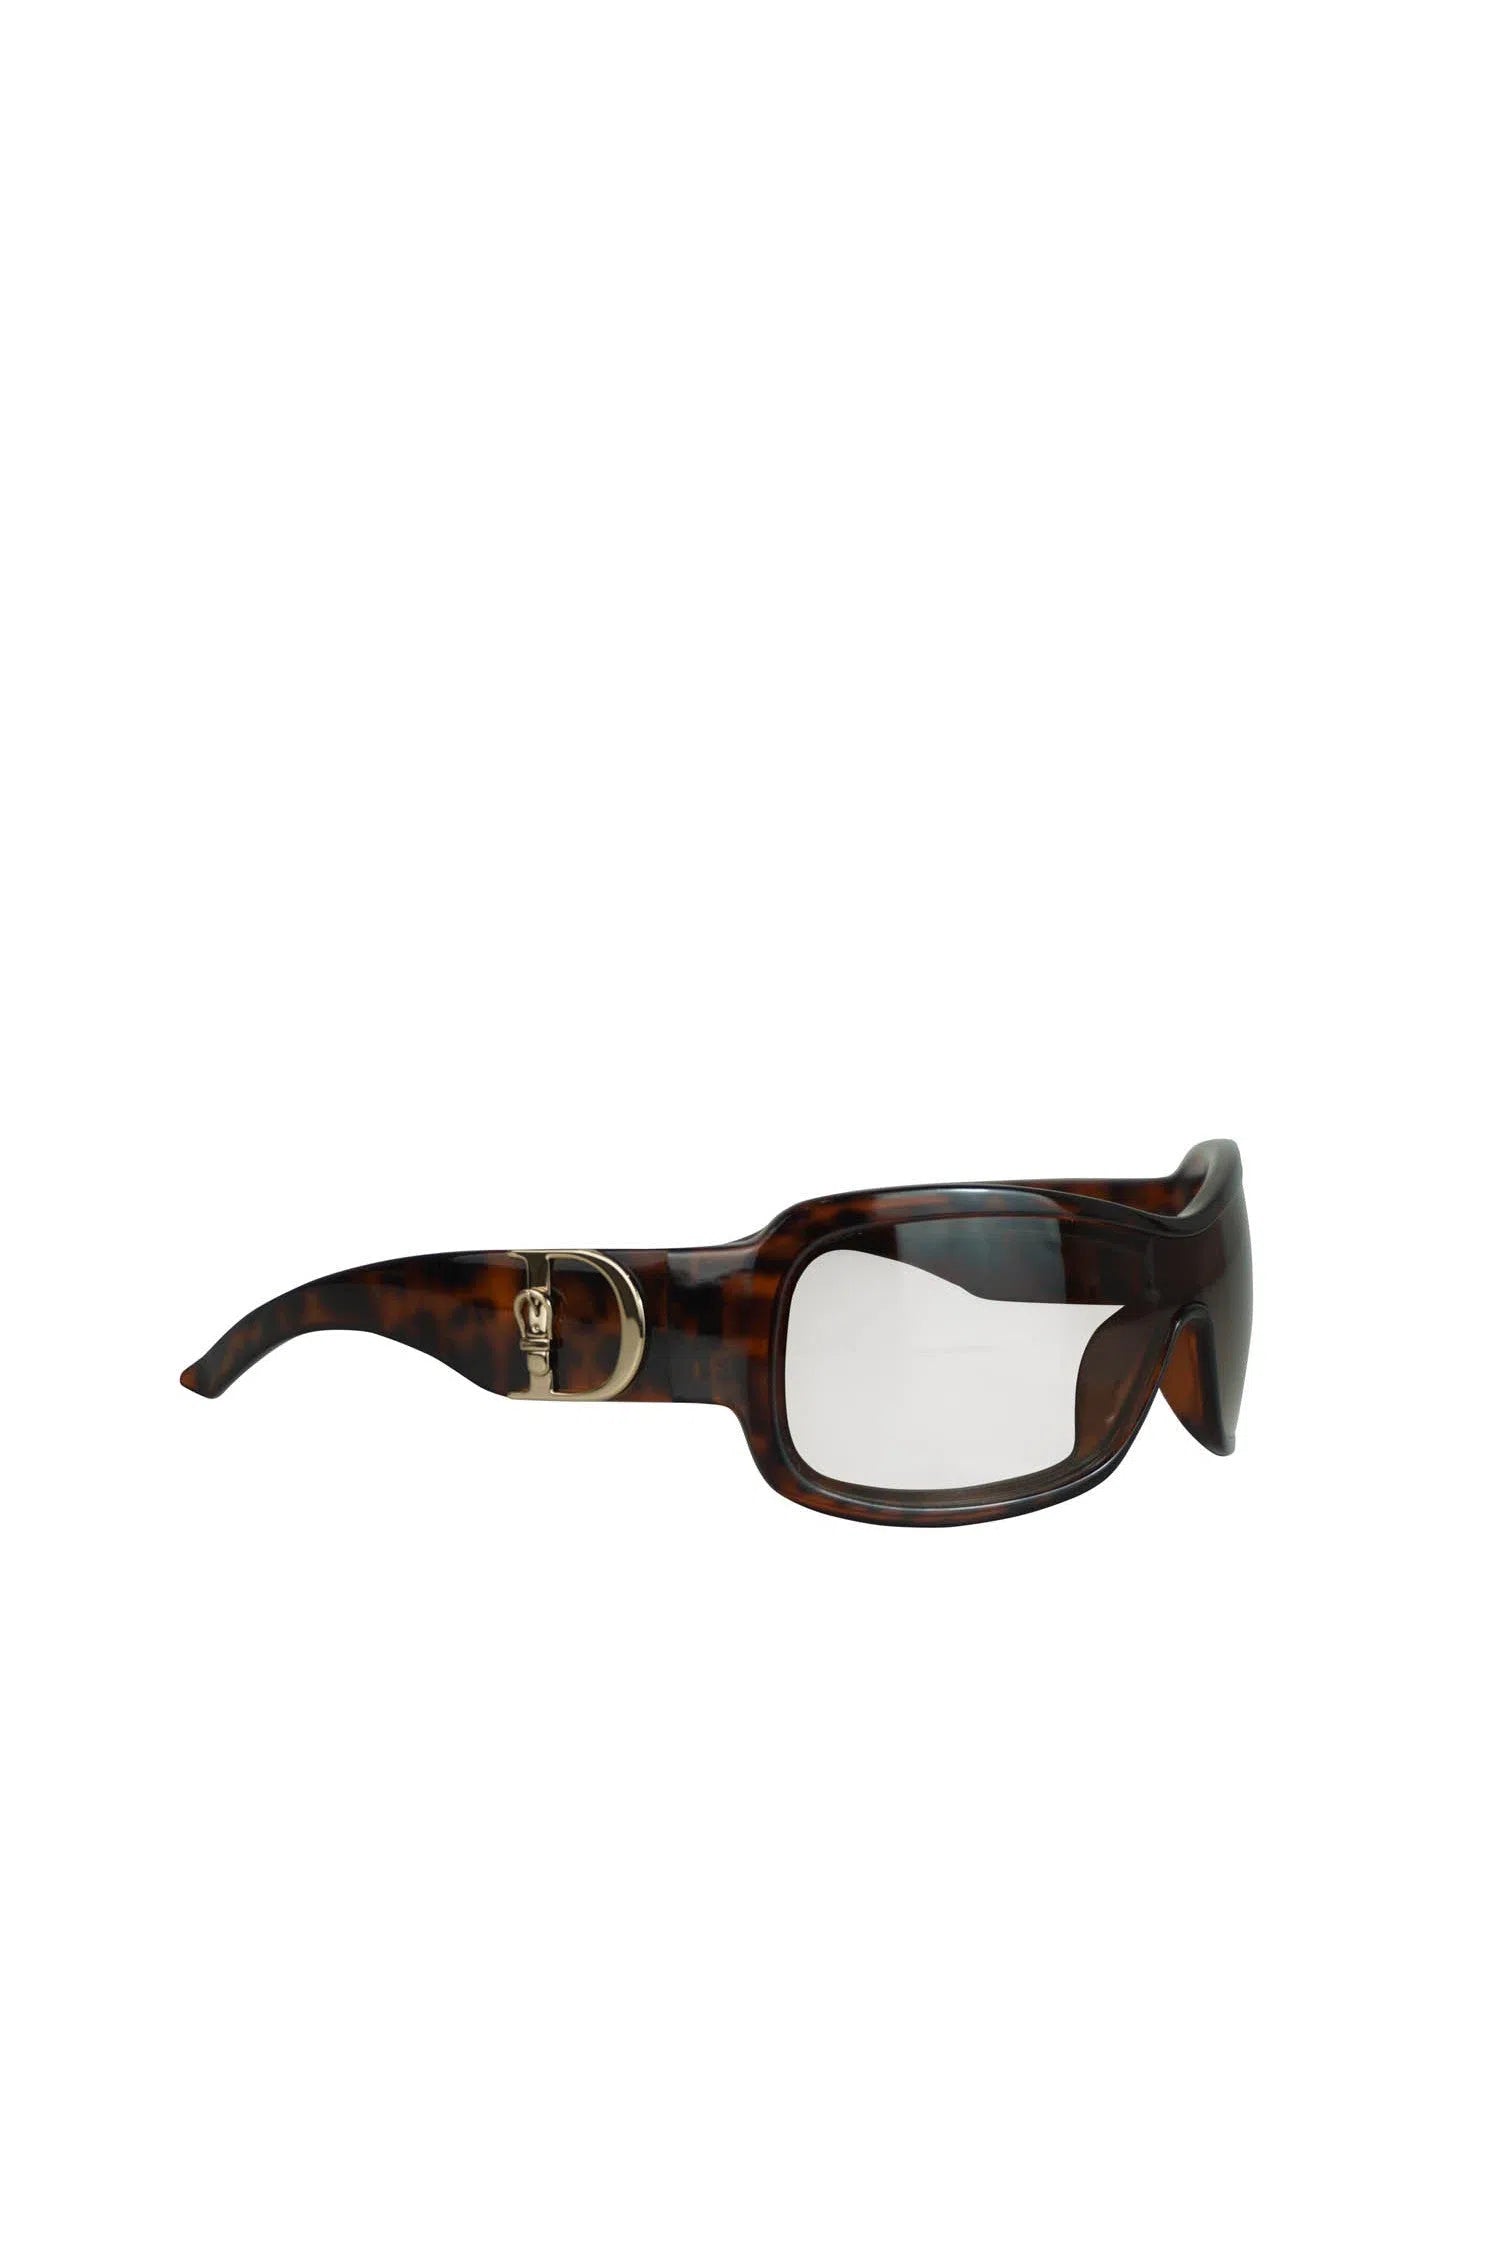 Christian Dior Tortoise Large D Cannage Sunglasses